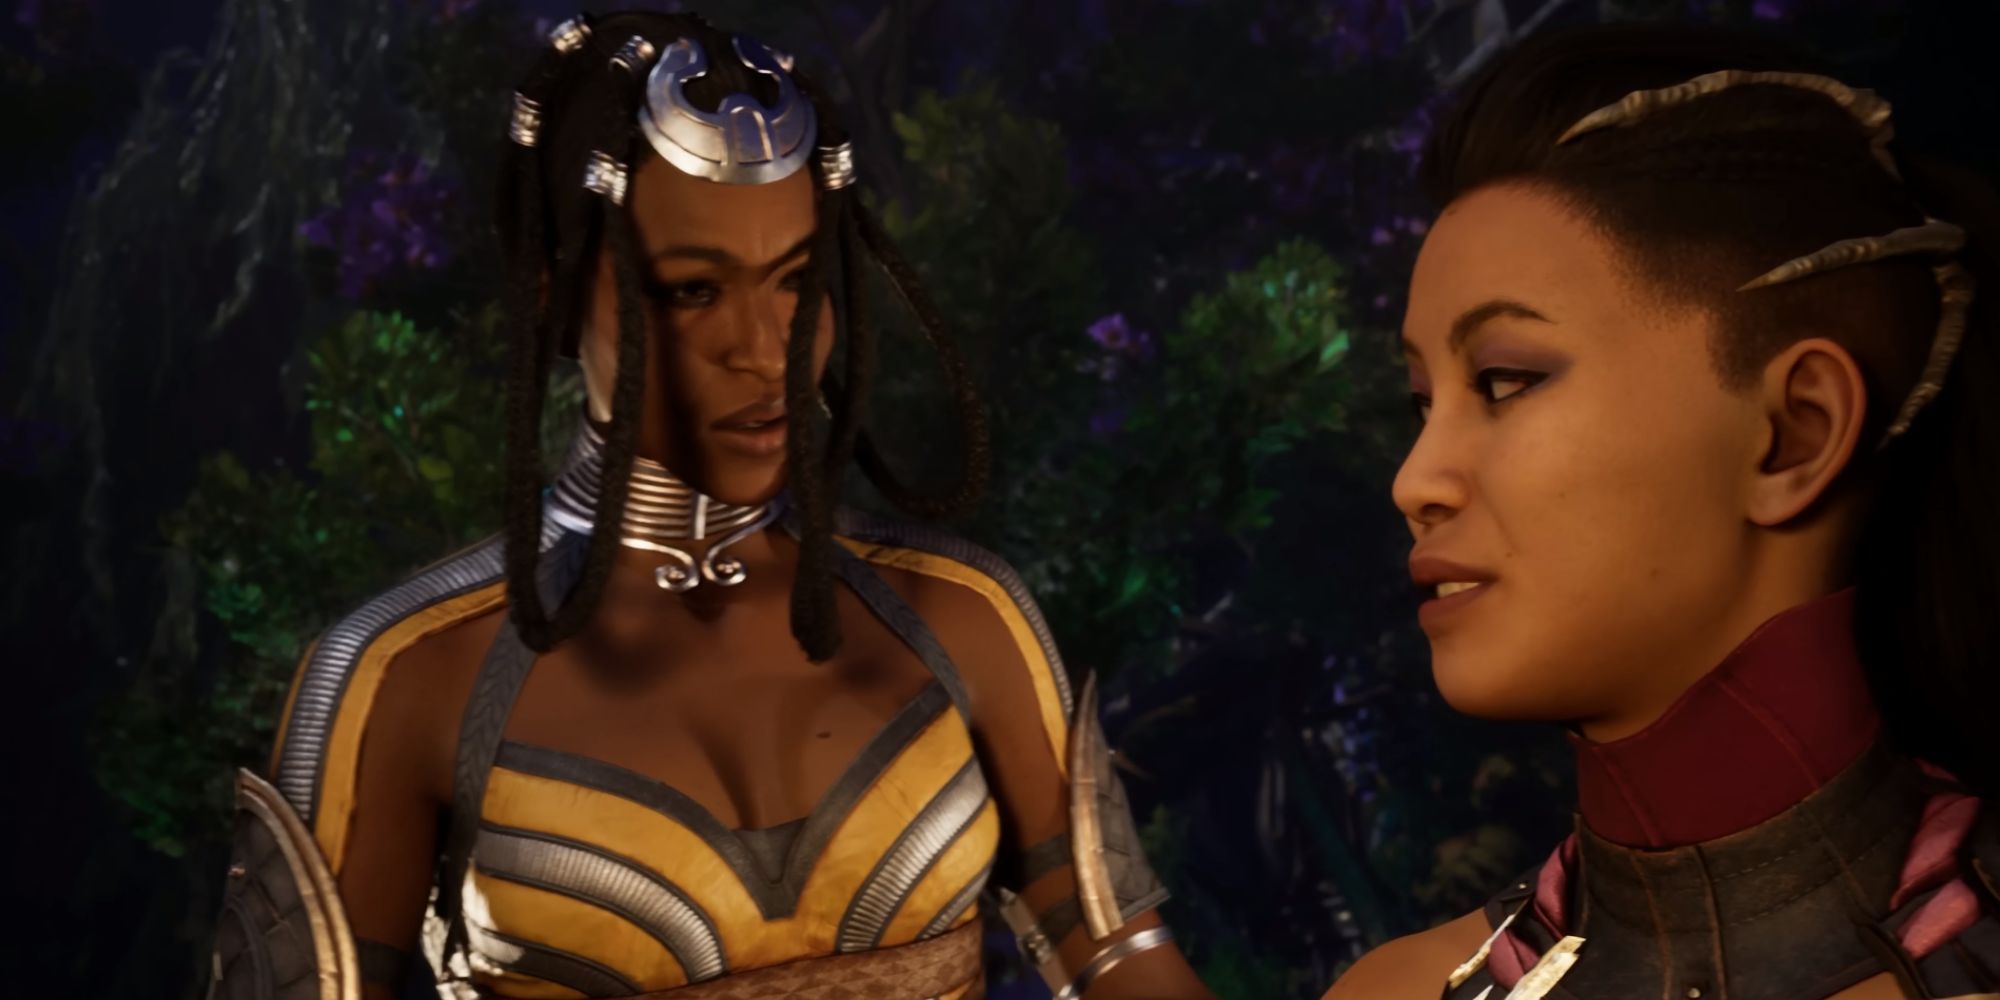 Mortal Kombat 11 Ultimate Confirms Mileena's Lesbian Relationship with  [SPOILER]